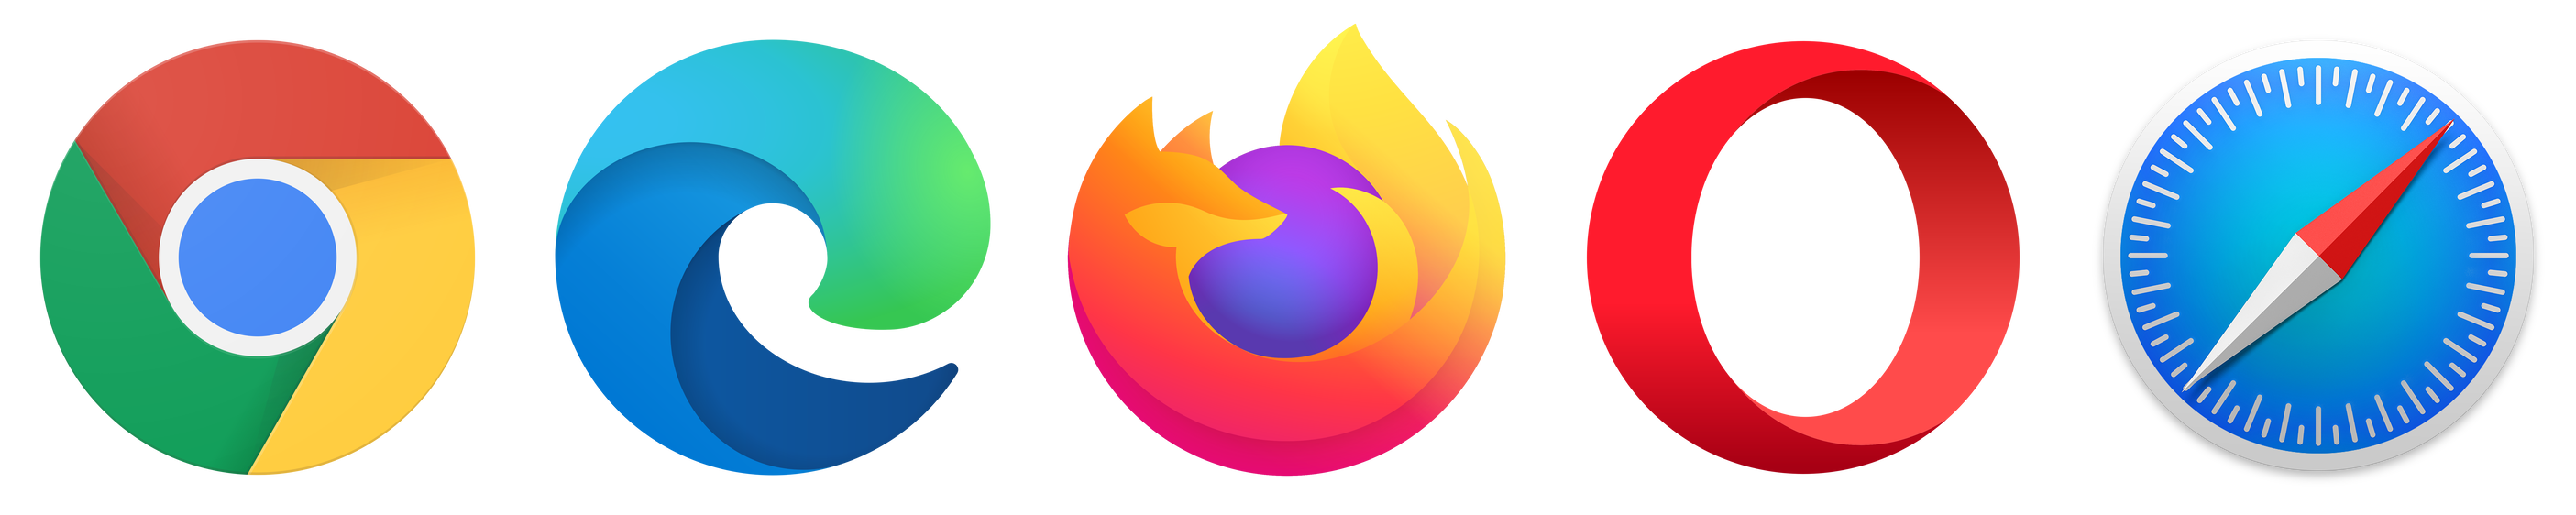 Works in all modern browsers: Chrome, Edge, Firefox, Opera and Safari